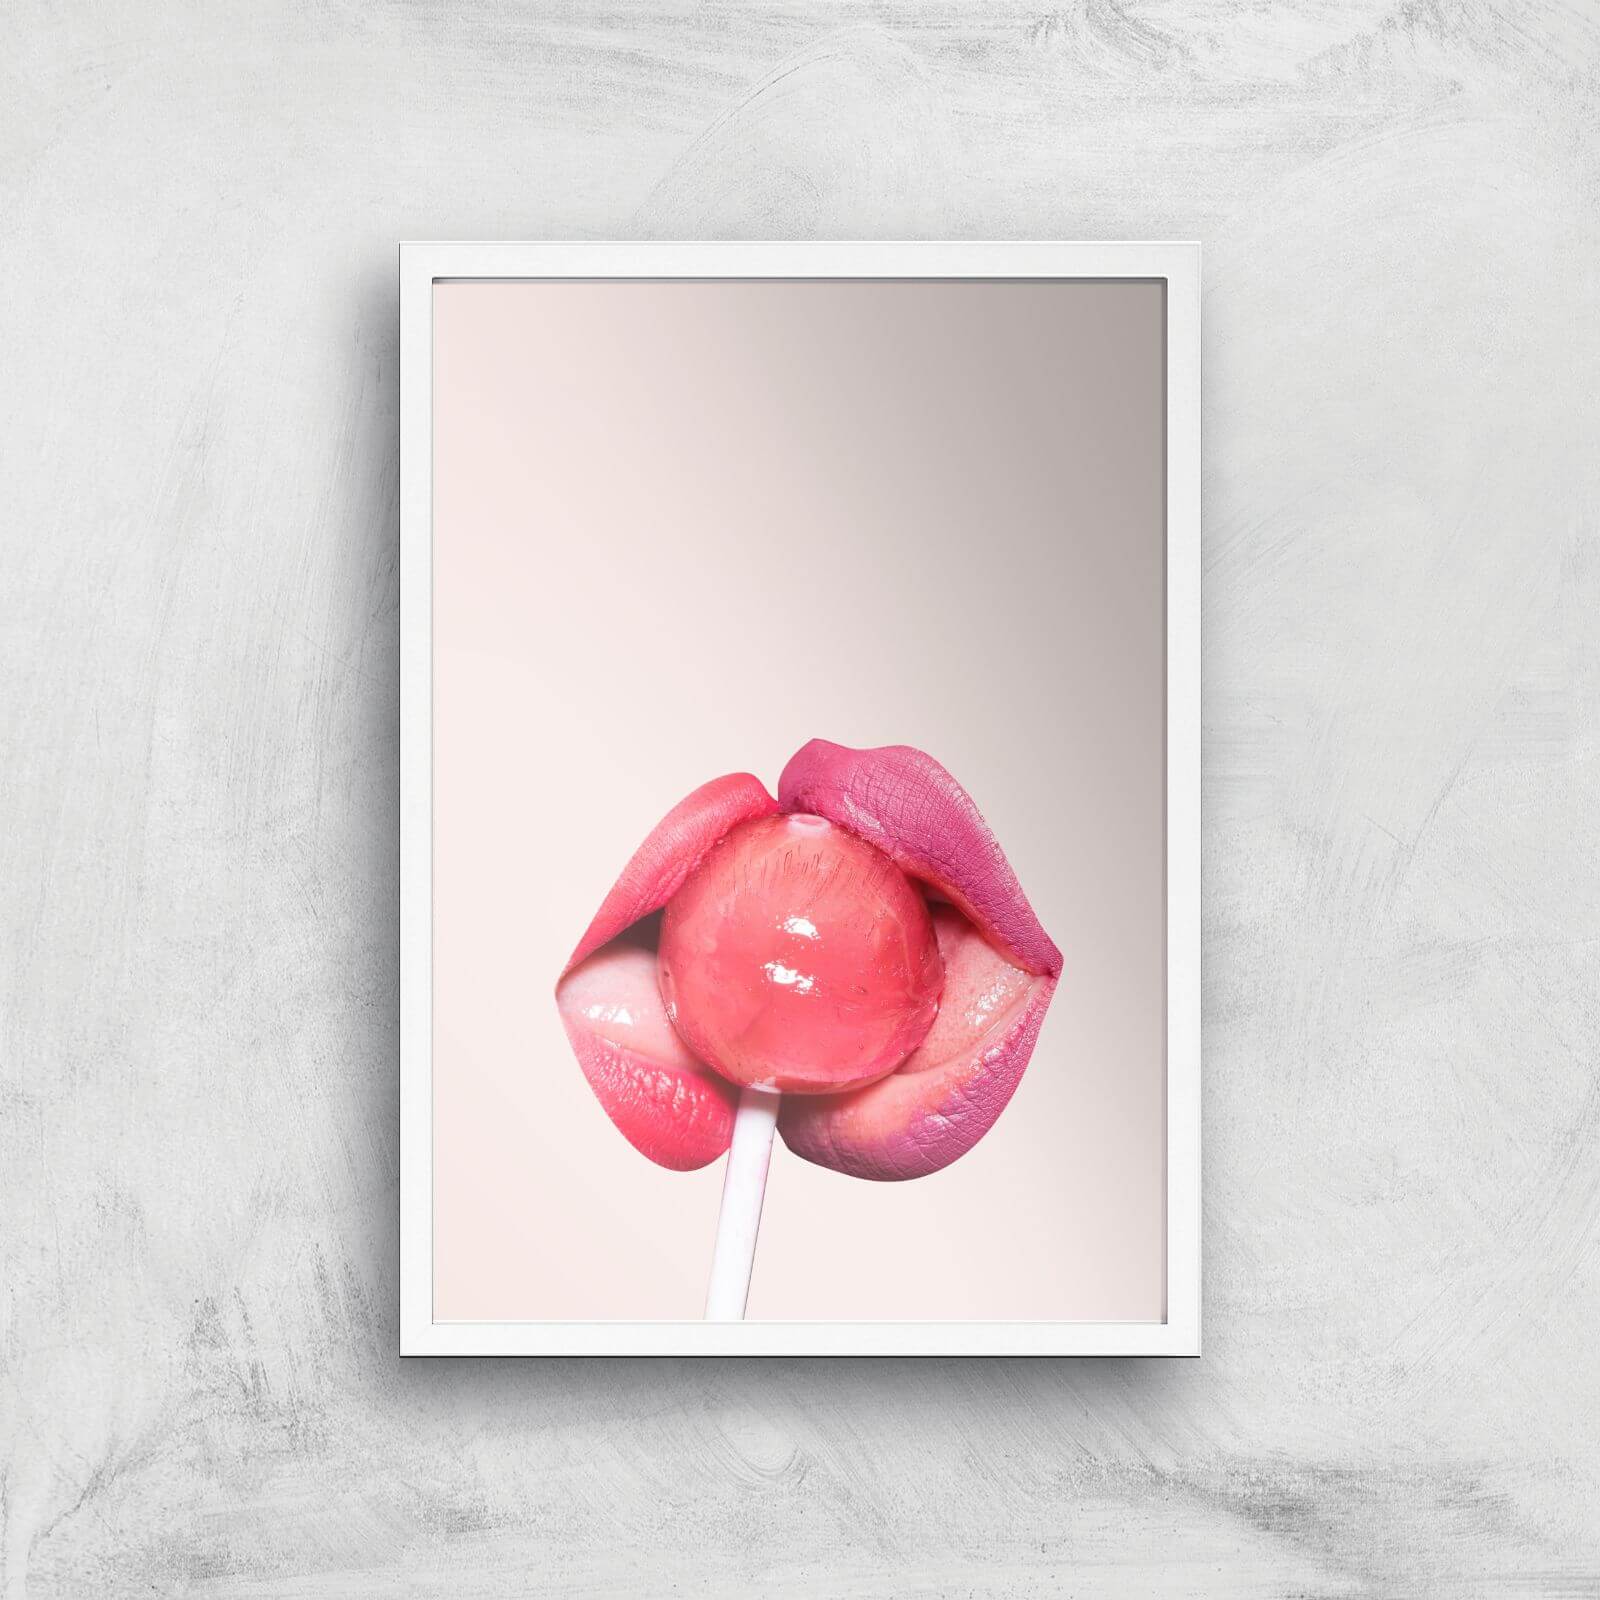 Lollipop Giclee Art Print - A3 - White Frame